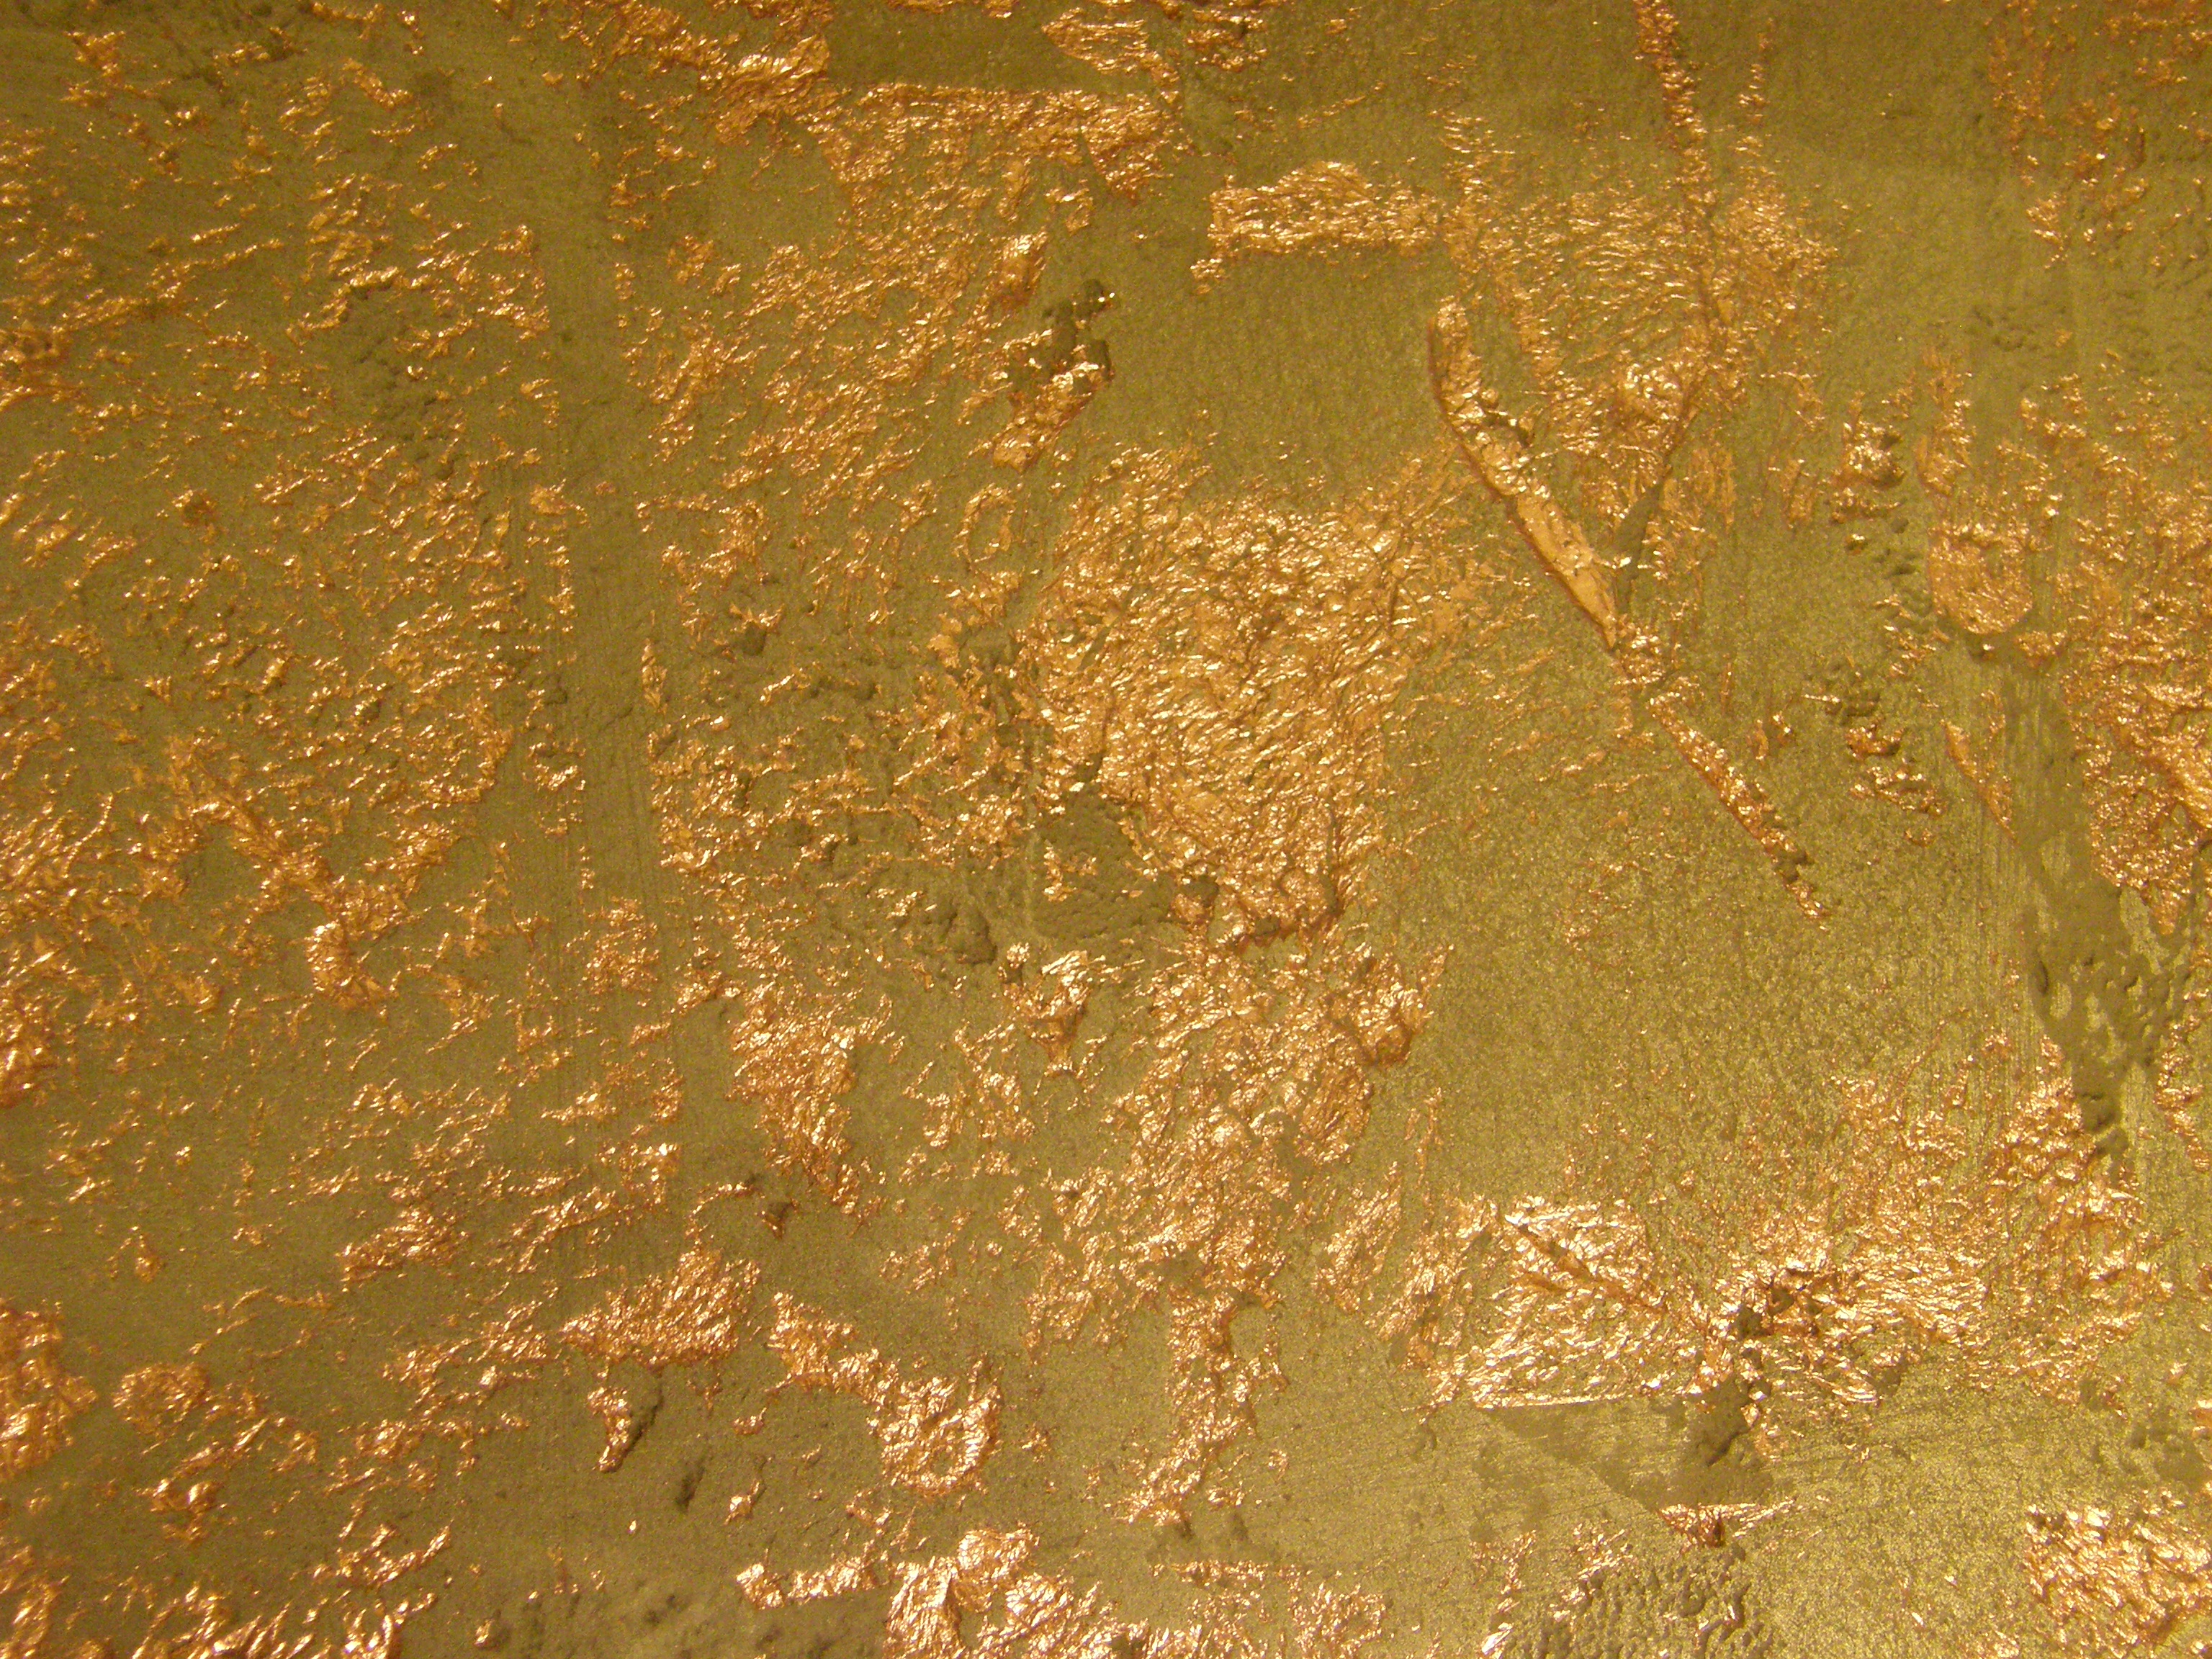 Texture 60 - Gold Leaf by SenhArt on DeviantArt